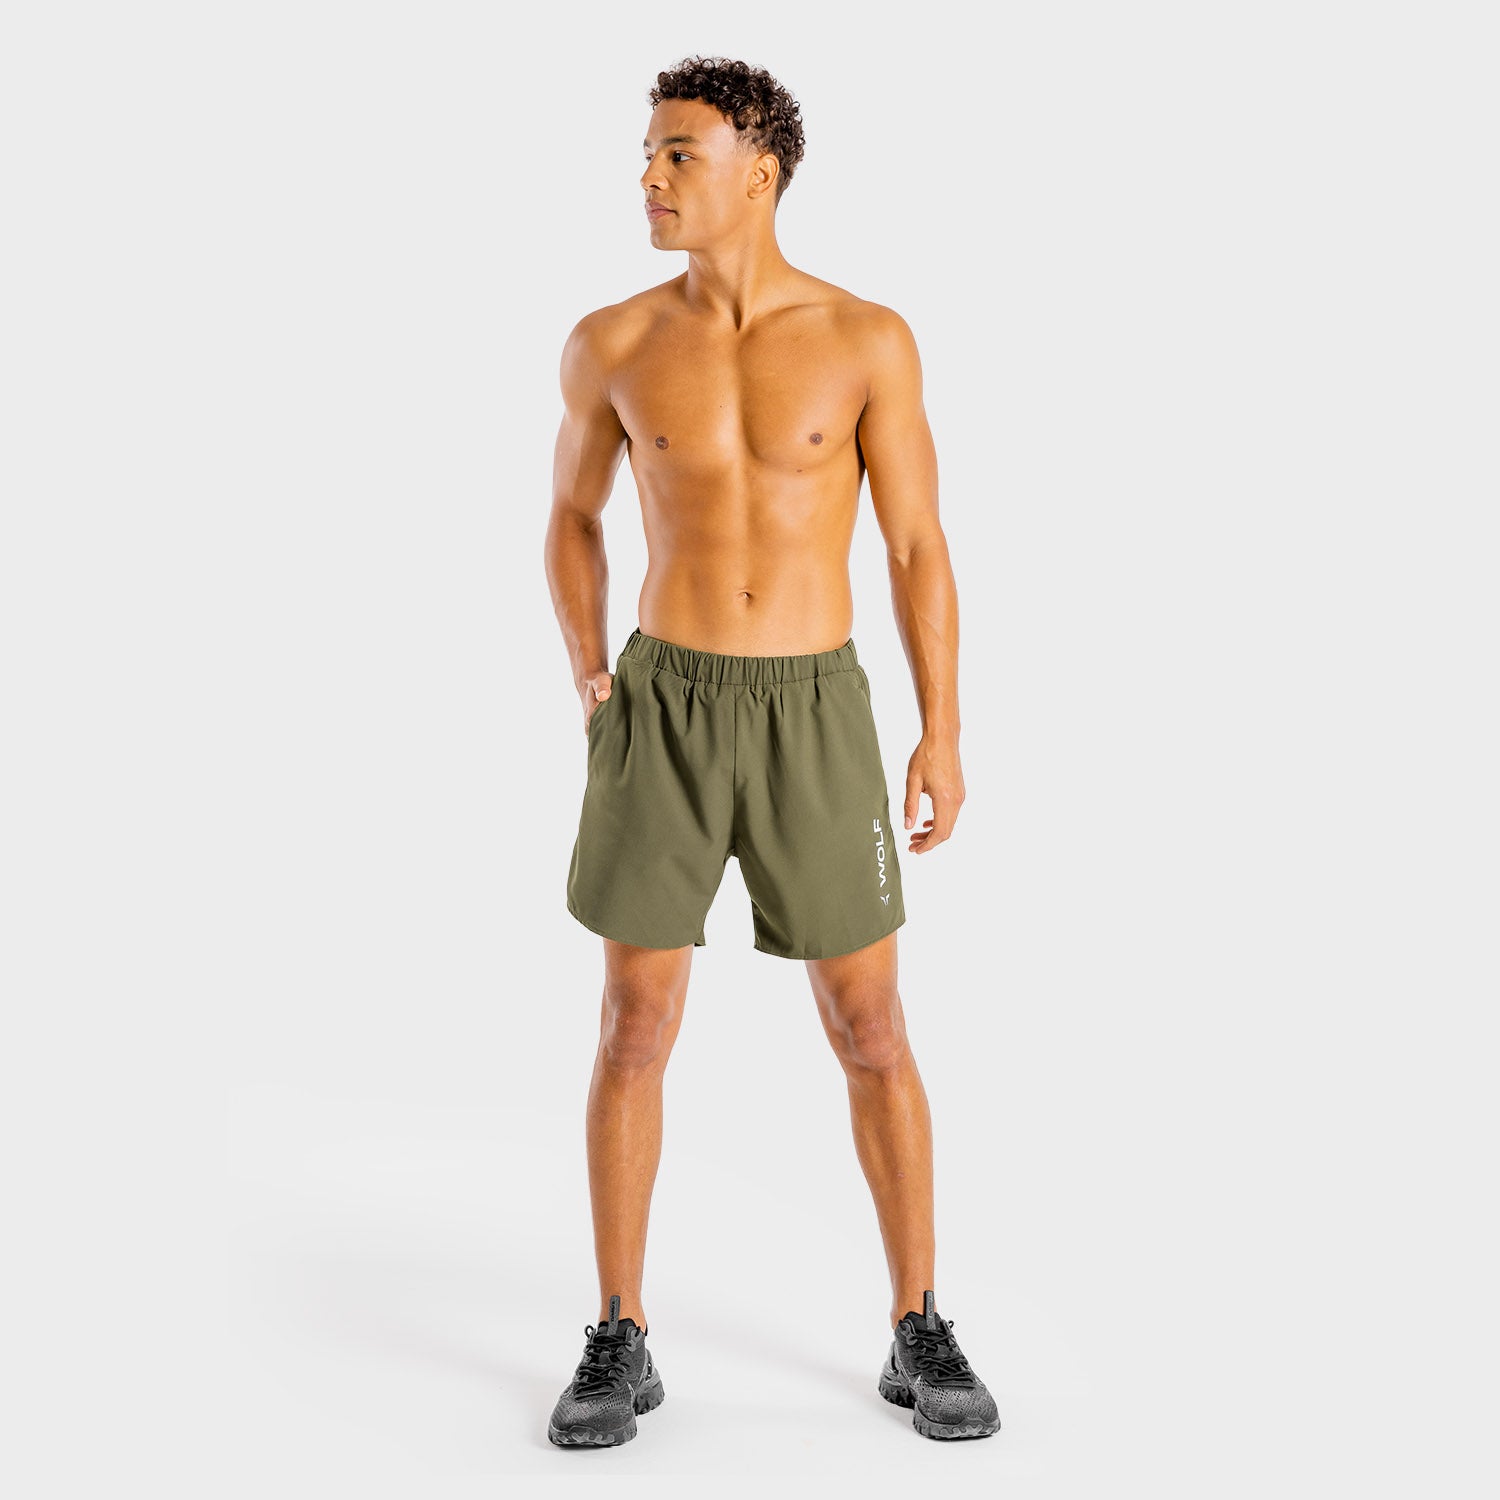 squatwolf-workout-short-for-men-primal-shorts-khaki-gym-wear